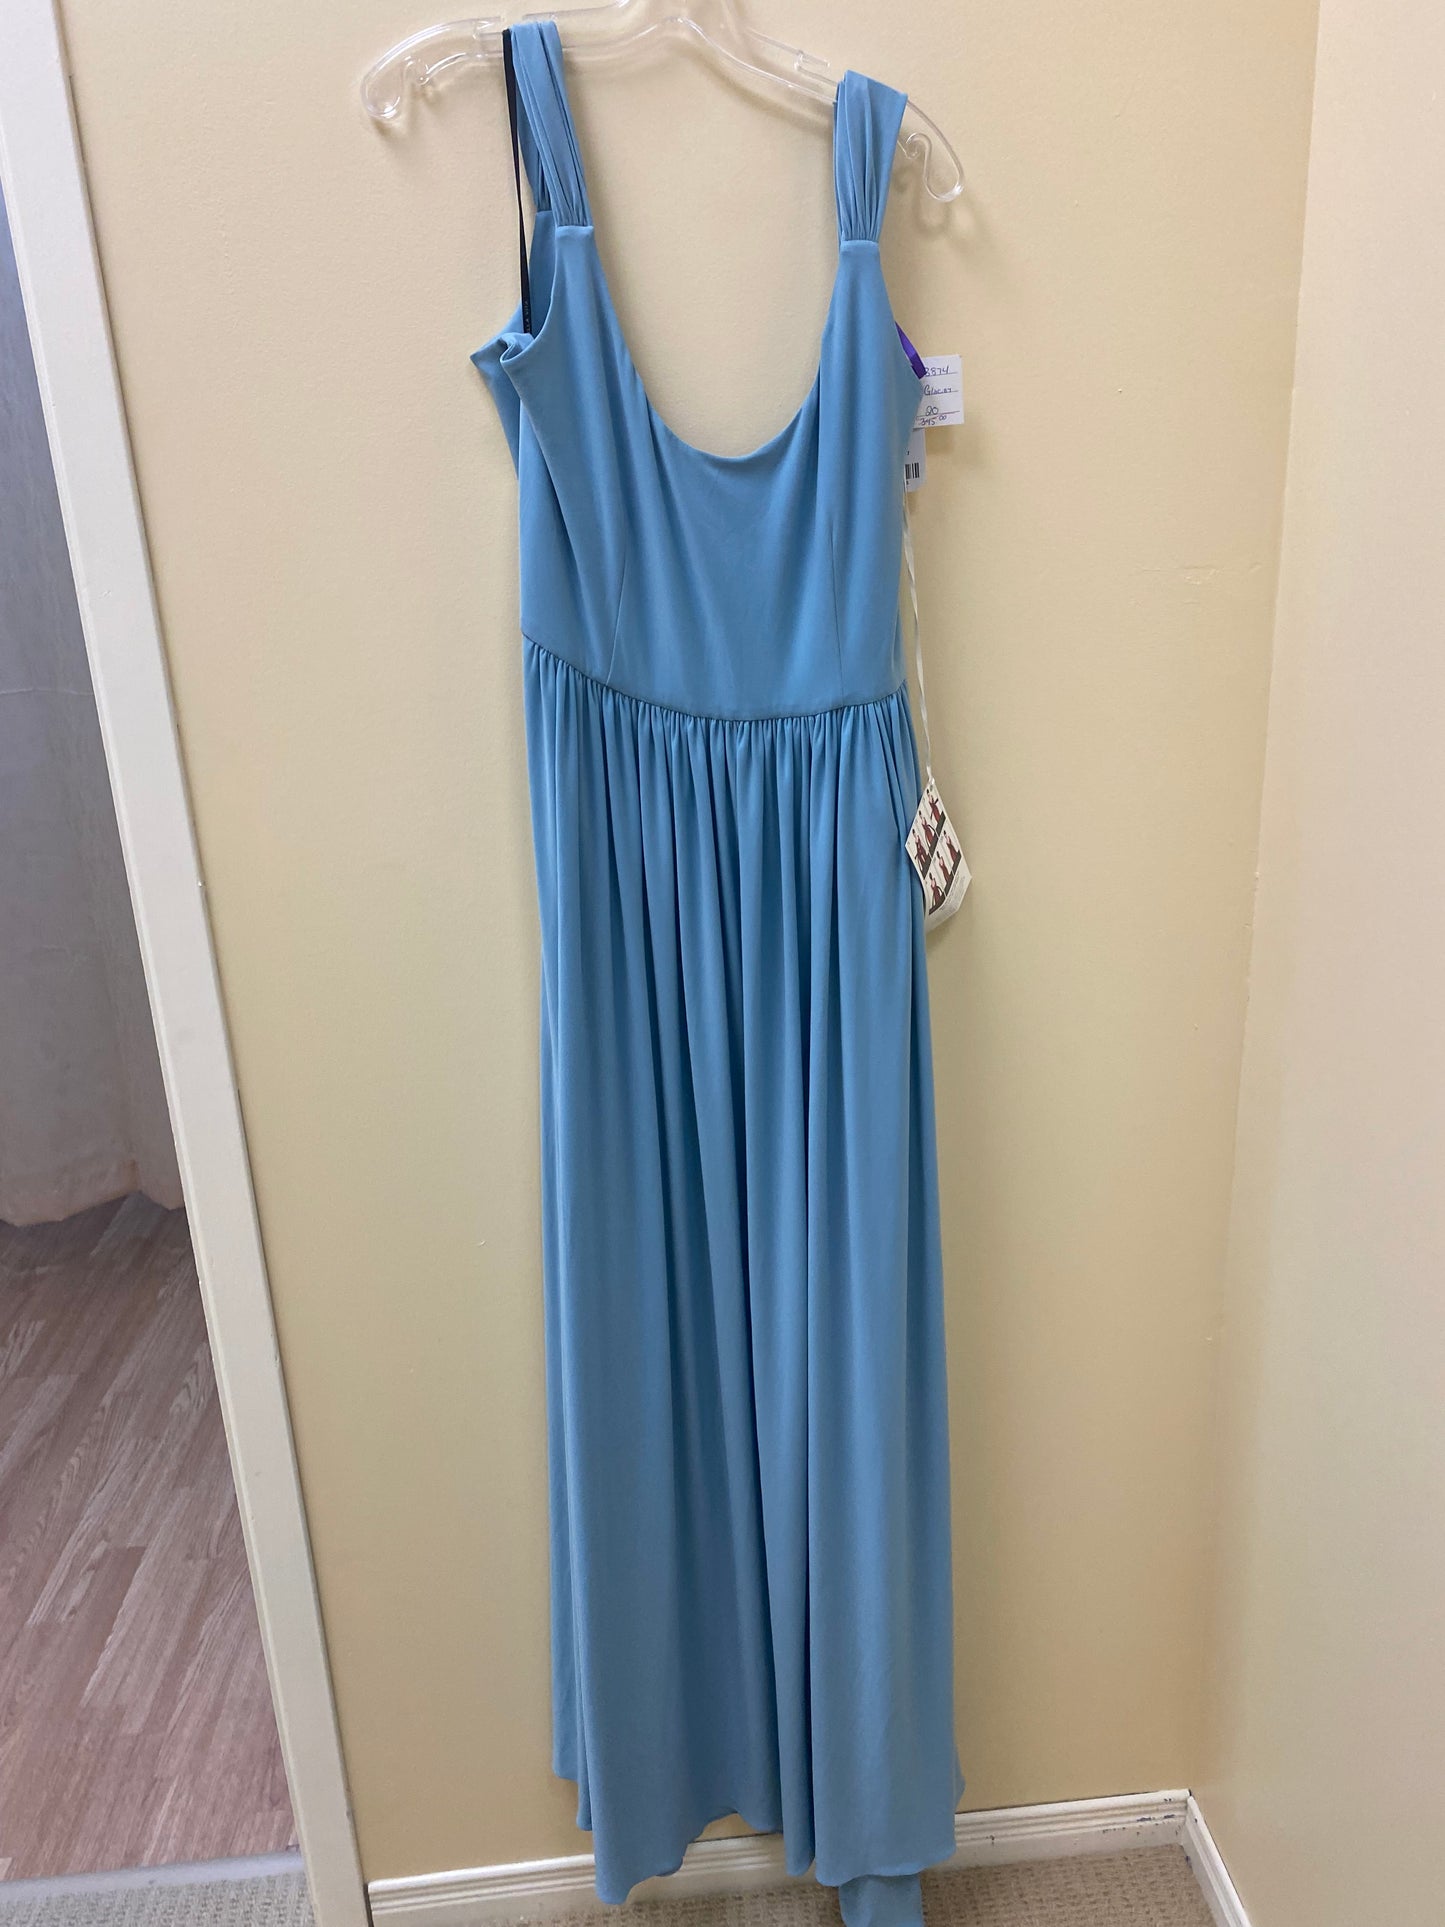 SORELLA VITA - 8874 - Glacier Size 20, Rose Quartz Size 10 Long Prom / Bridesmaid Dress